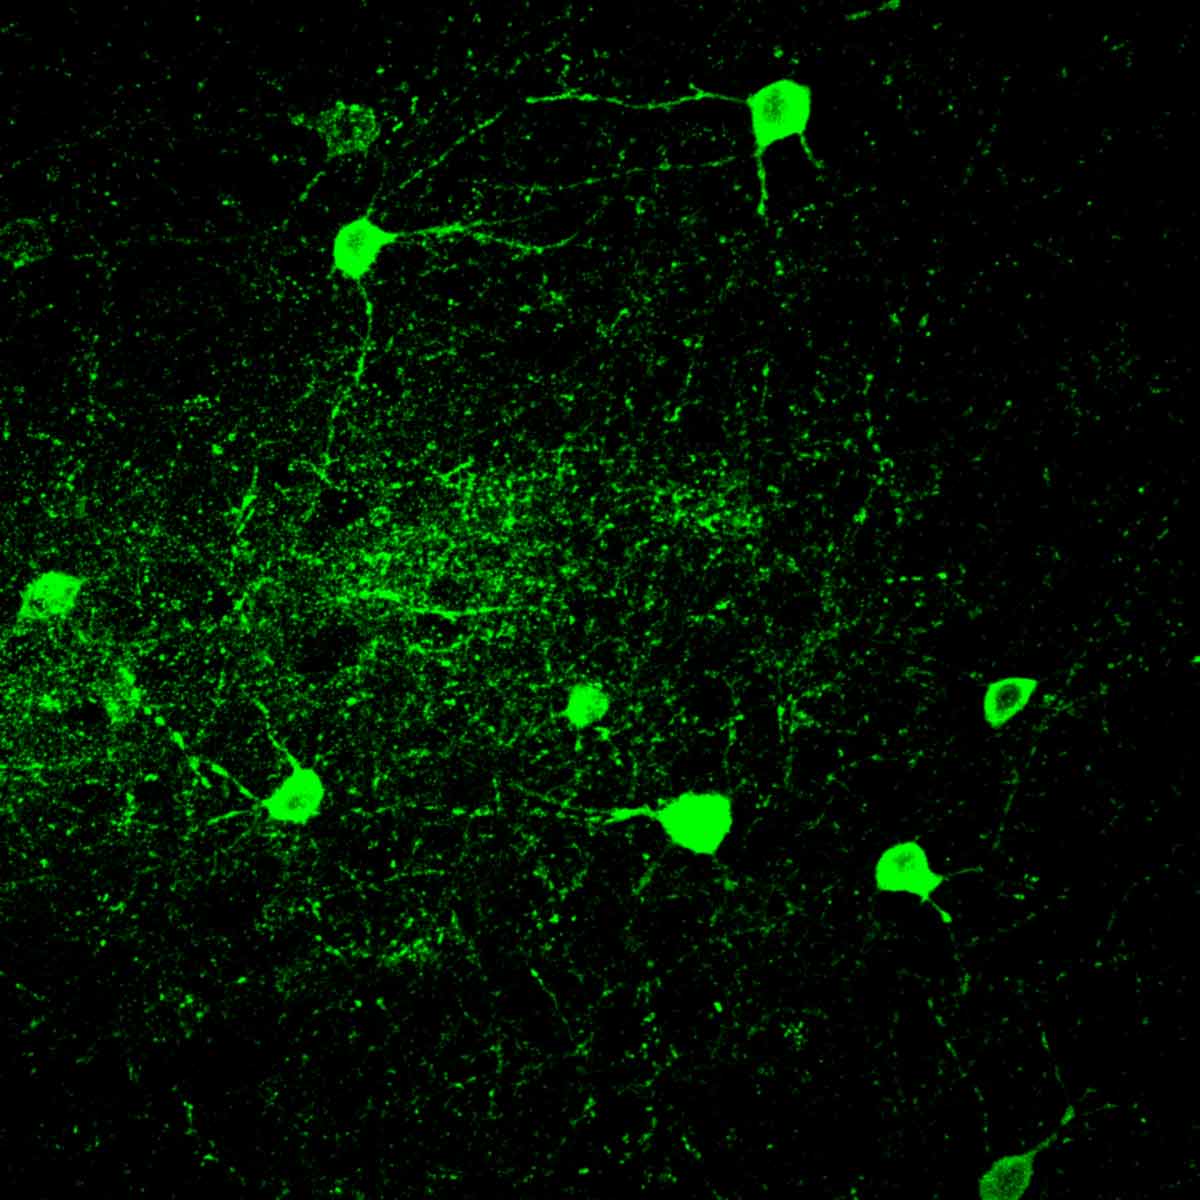 Mouse parvalbumin neurons